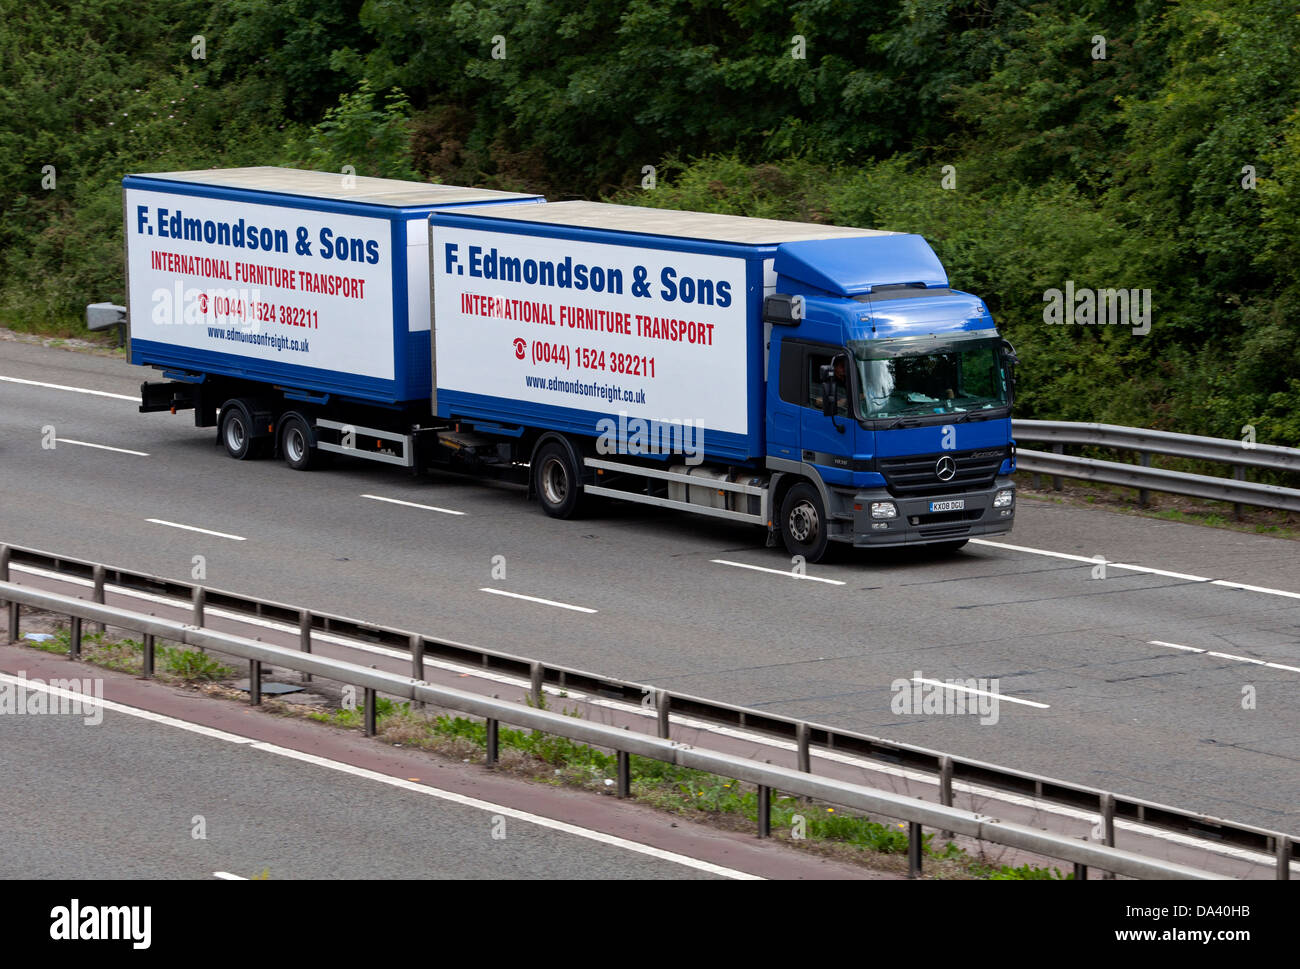 F Edmondson International Furniture Transport Lorry On M40